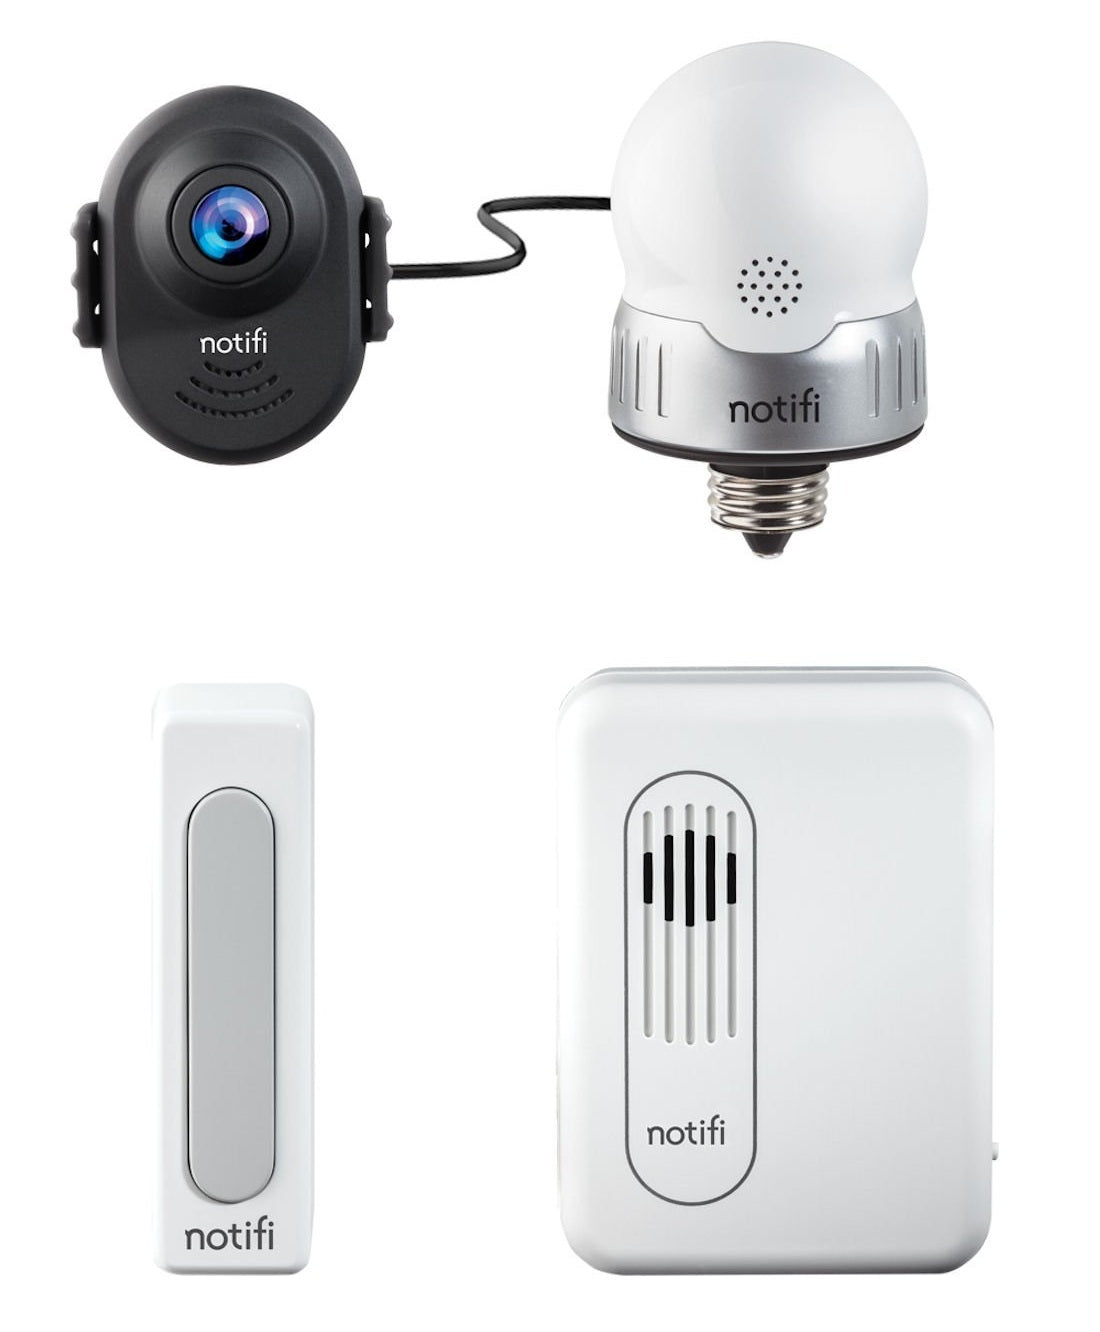 Heath Zenith SL-3010-00 Notifi Video Doorbell System